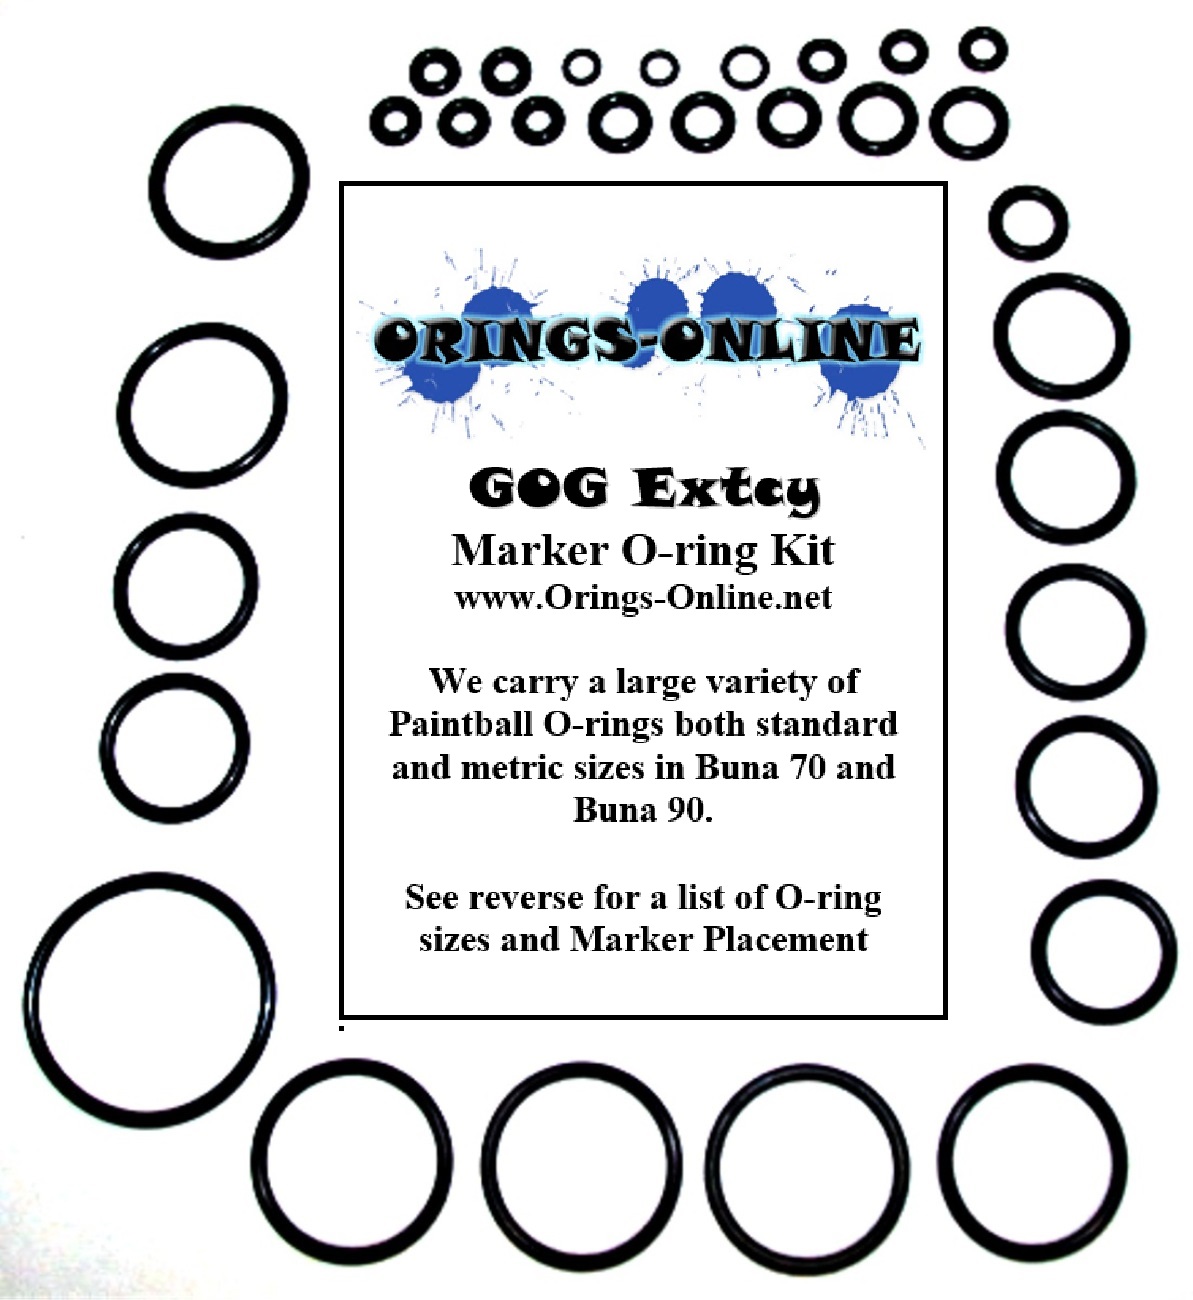 Gog Extcy Marker O-ring Kit